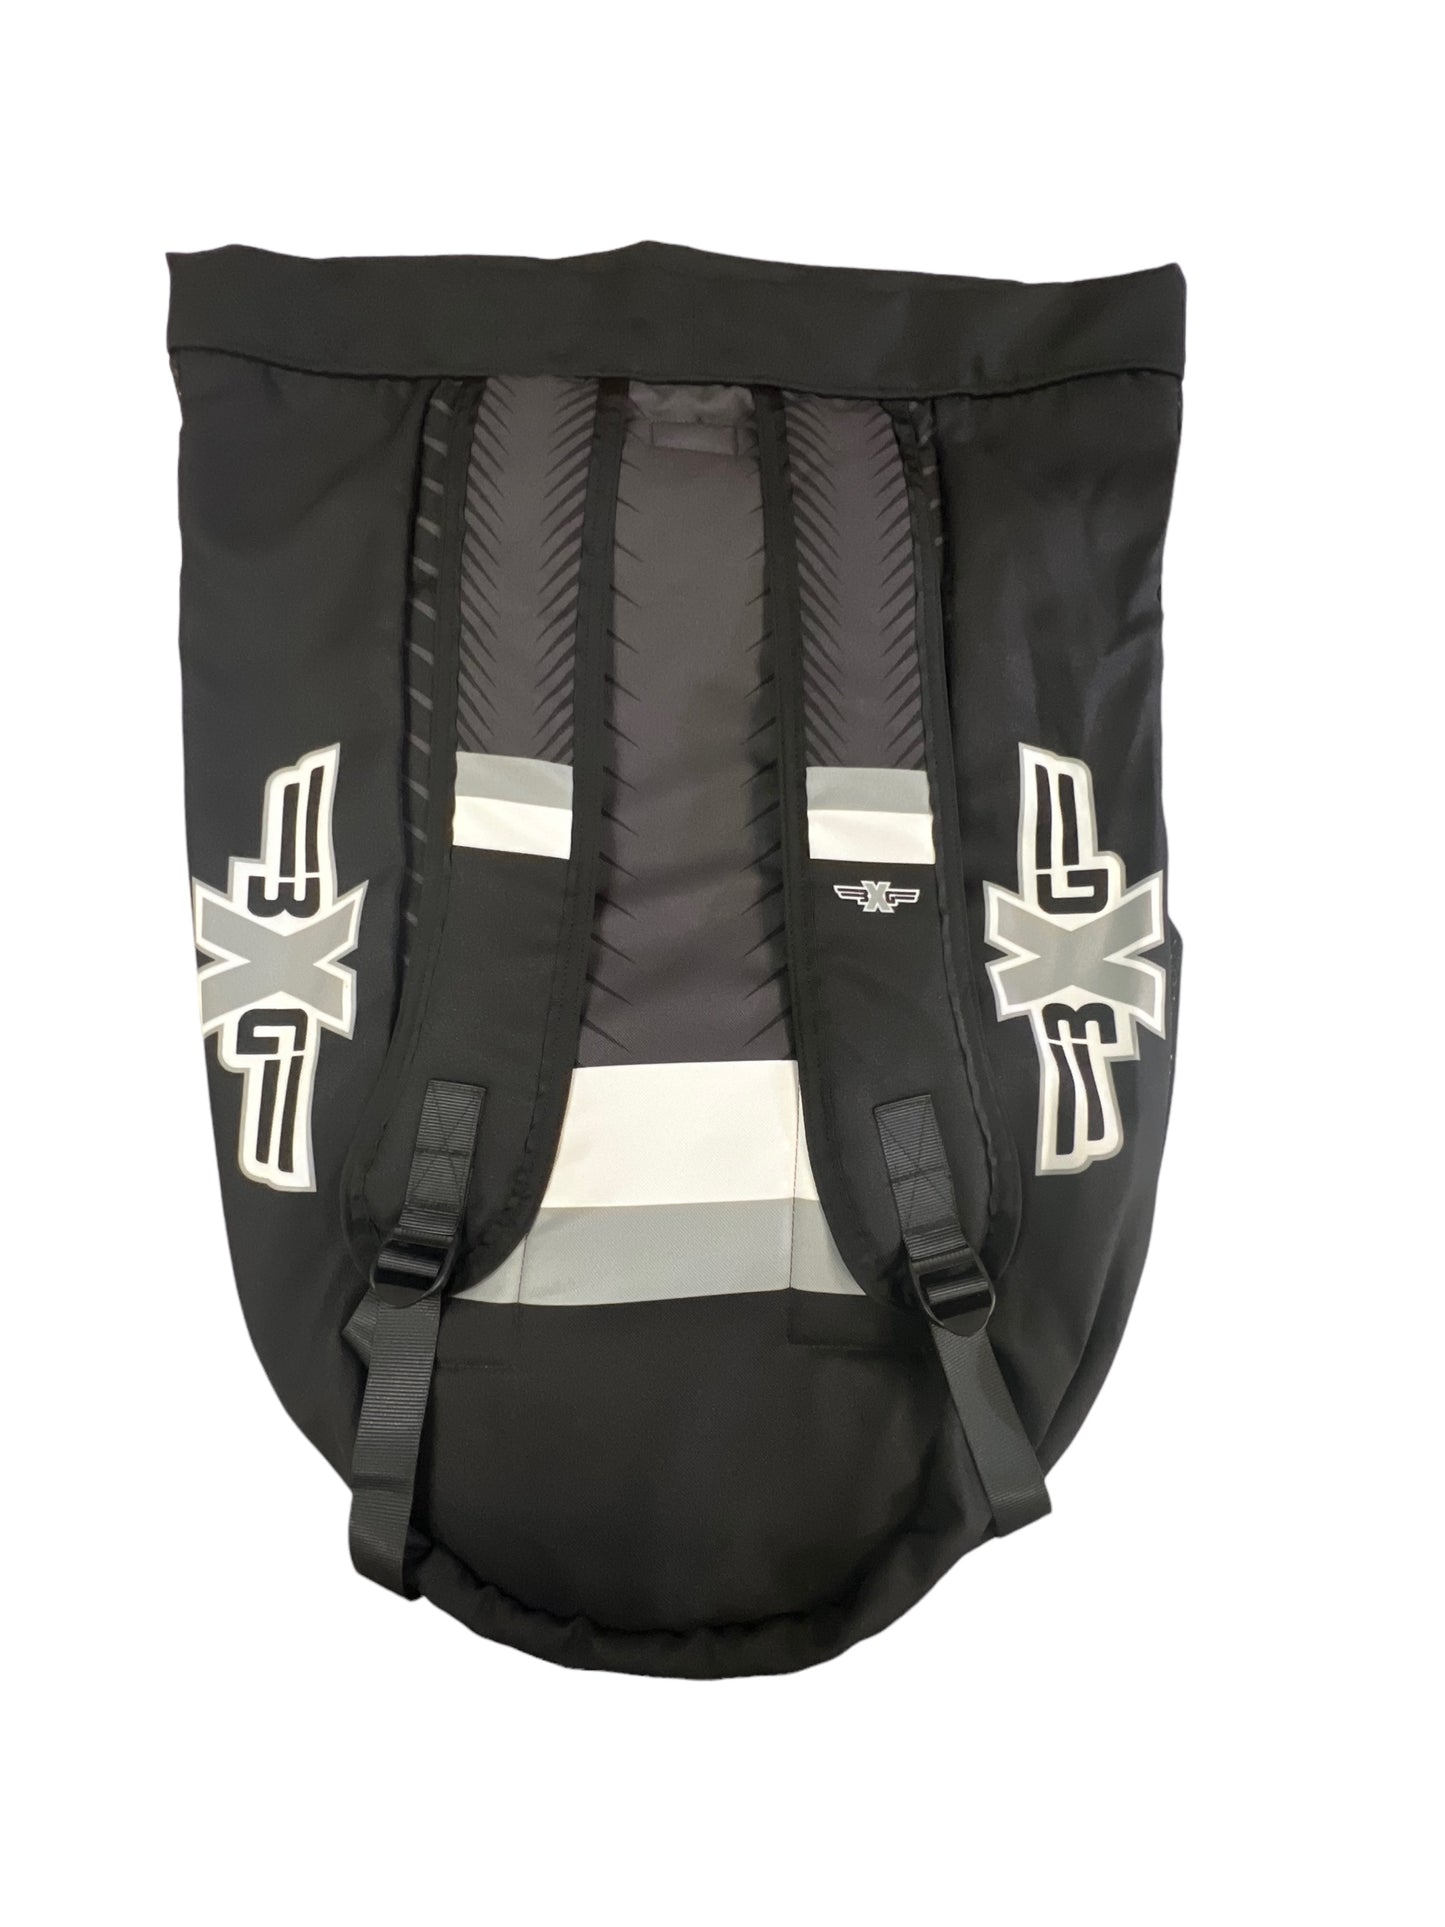 3xGear Sublimated Gear Bag